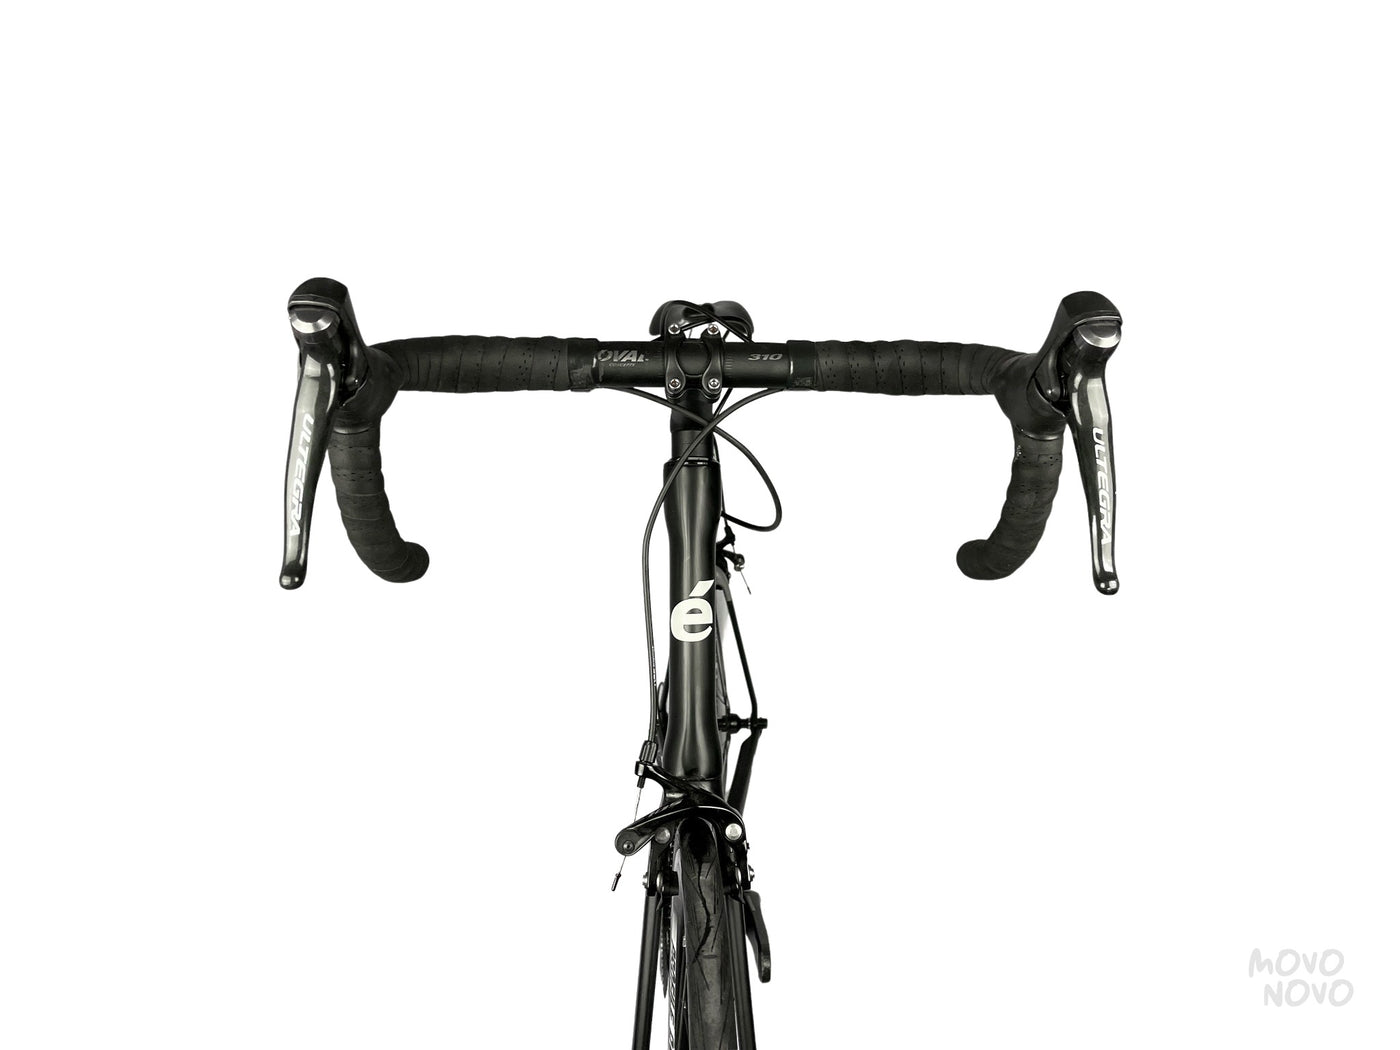 Cervélo S5 2015 - 60 - Bicycles